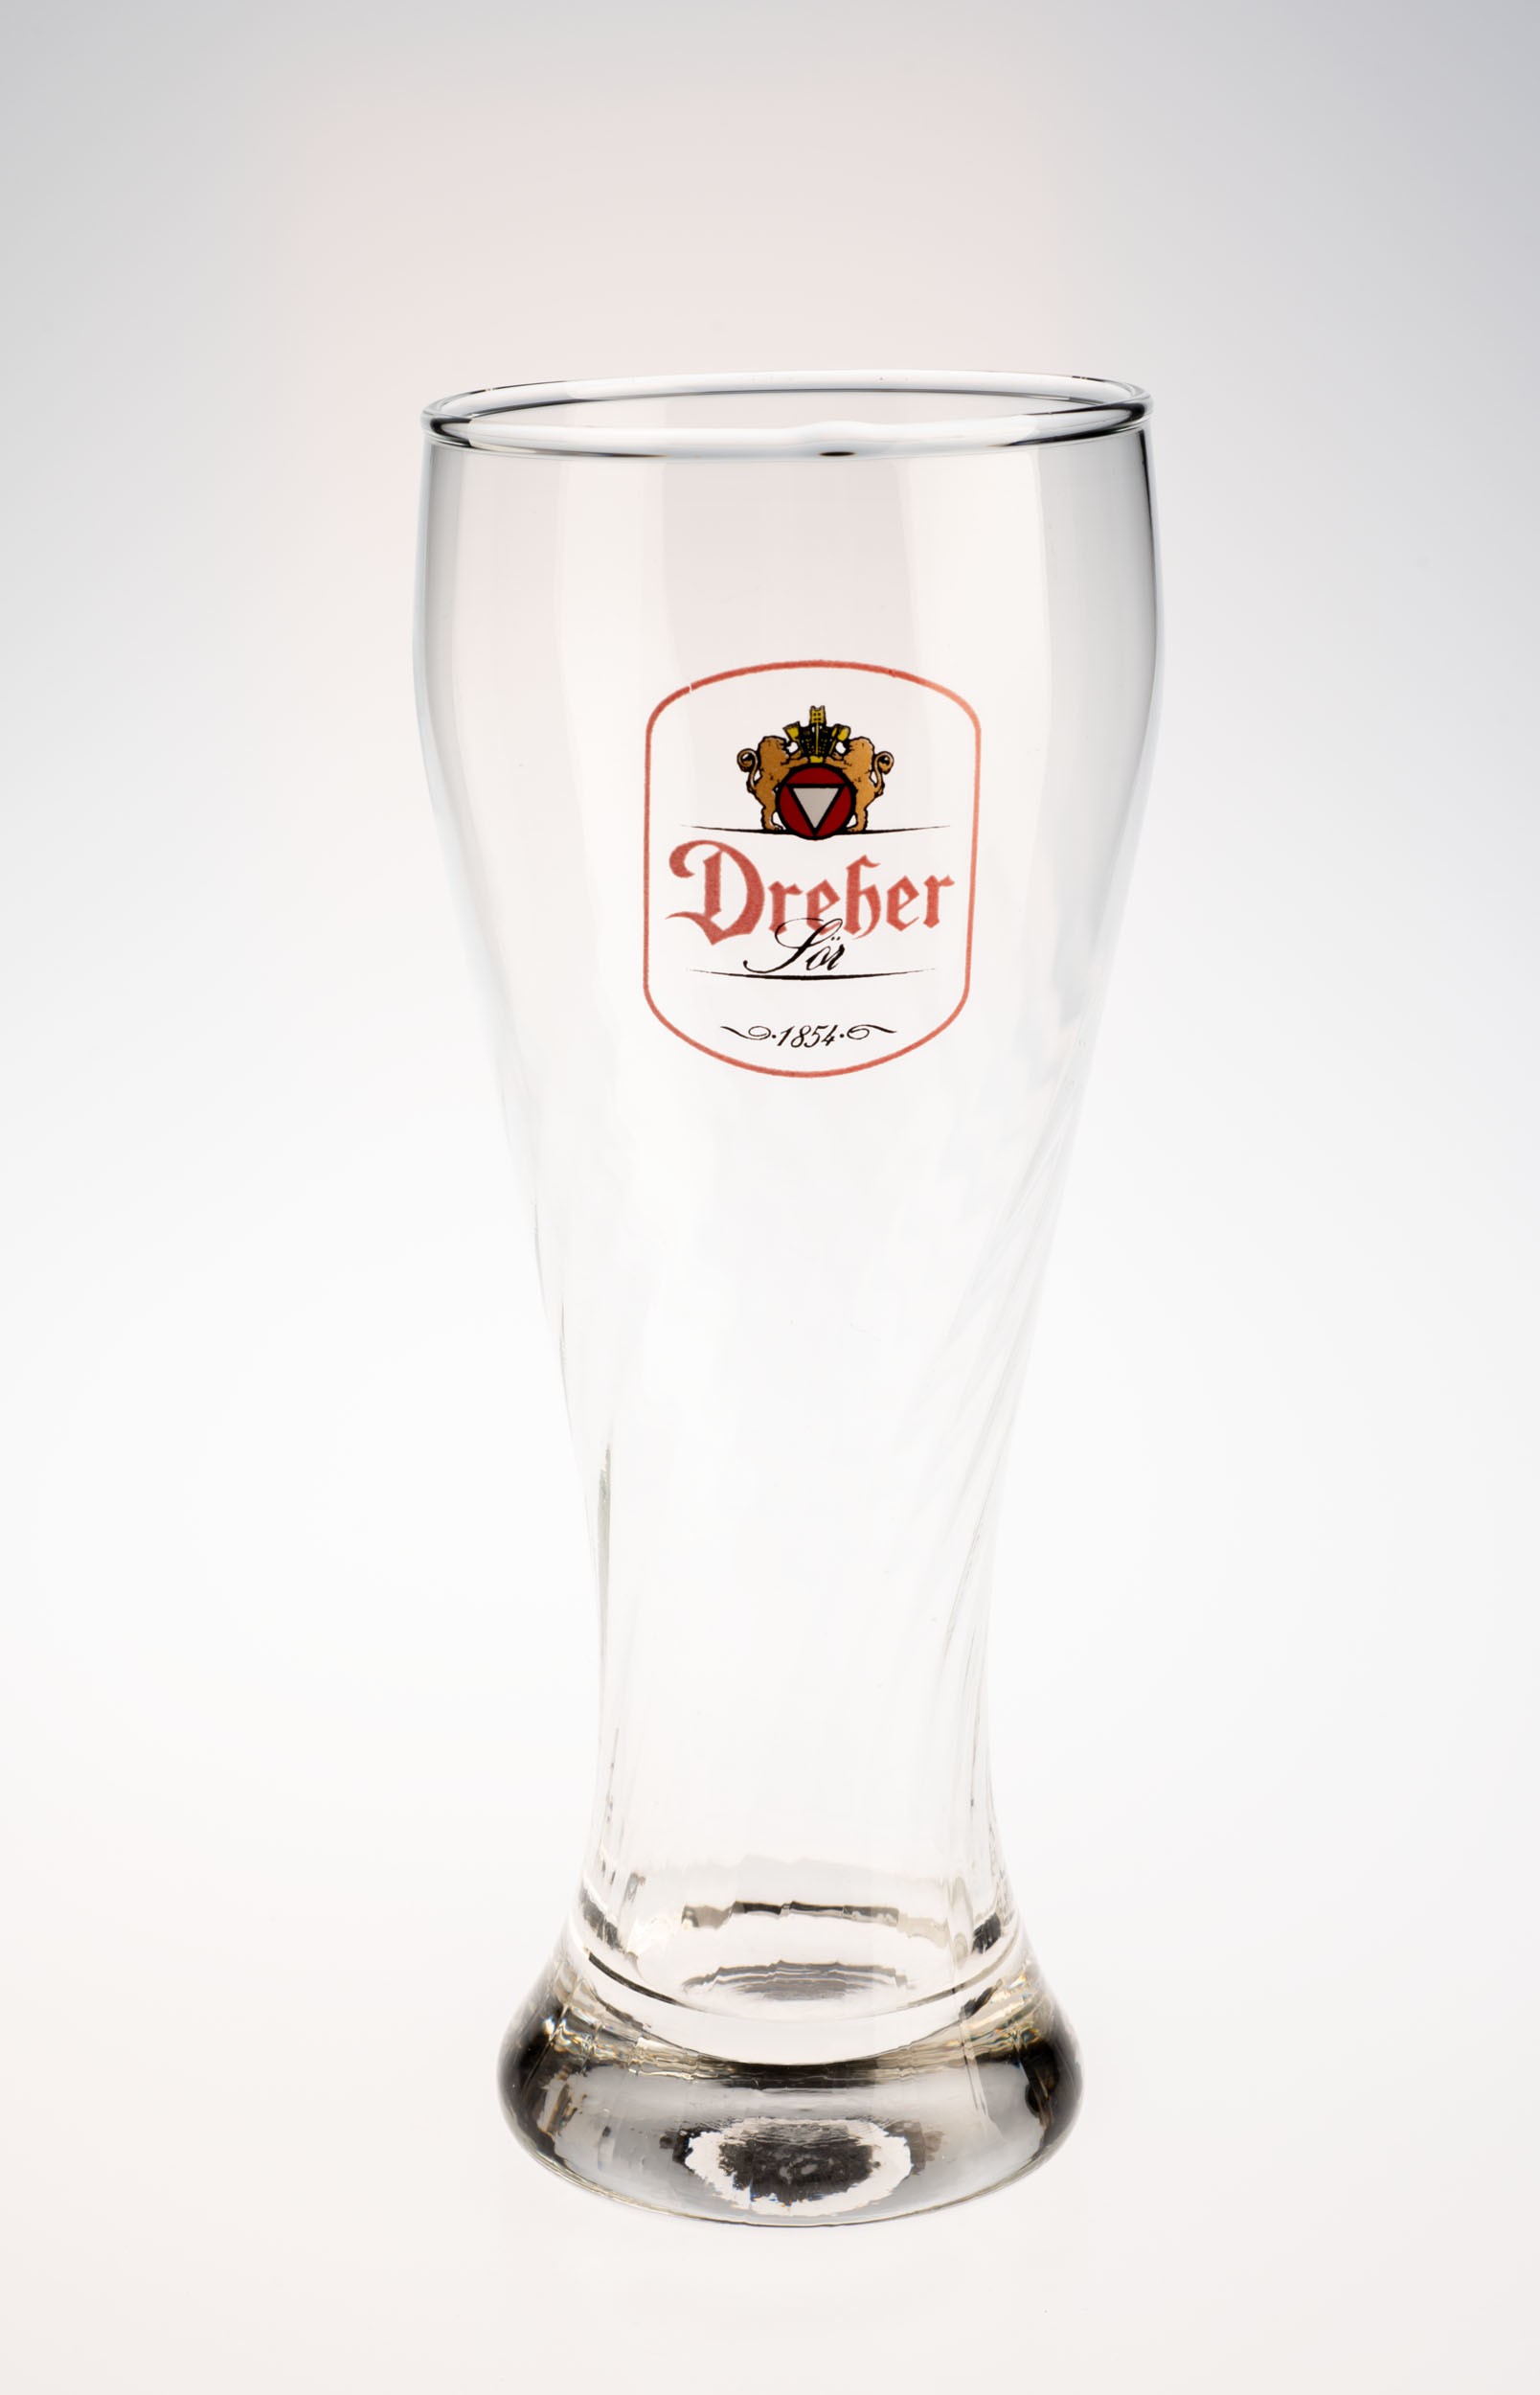 Dreher sör,pajzsos logó,stucni (Söripari Emléktár - Dreher Sörmúzeum CC BY-NC-SA)